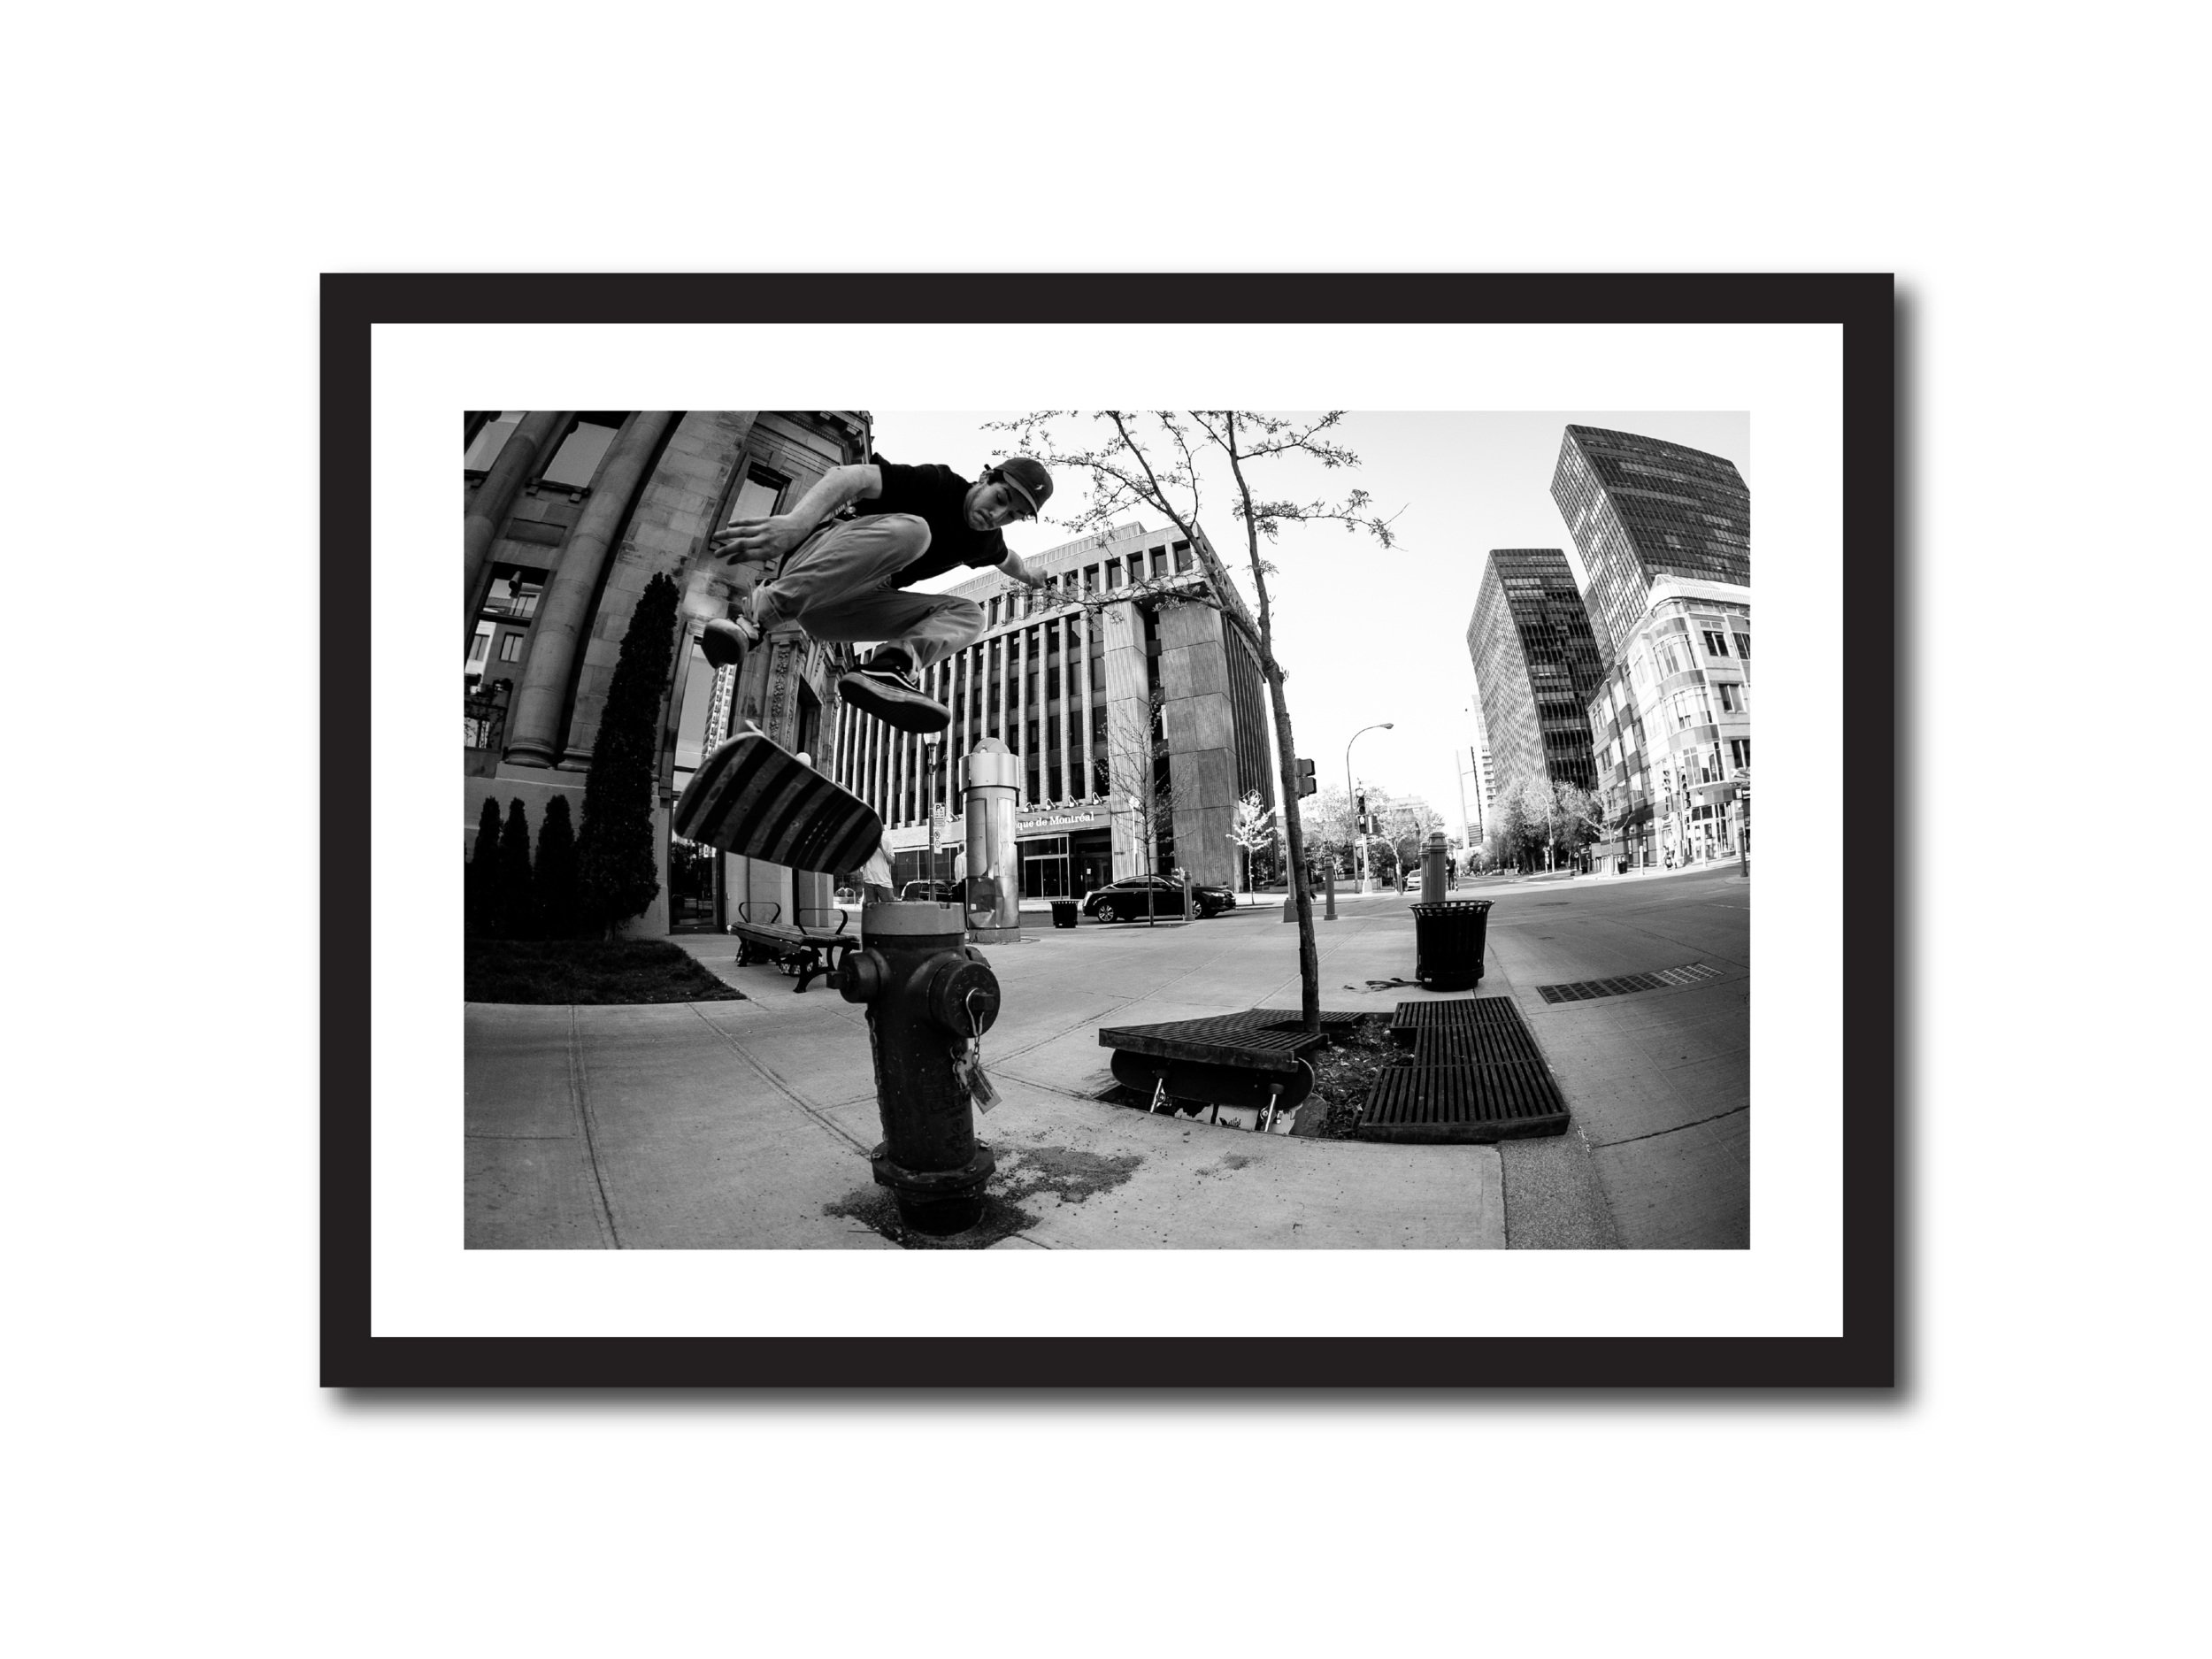 Skateboard+series+07-04.jpg